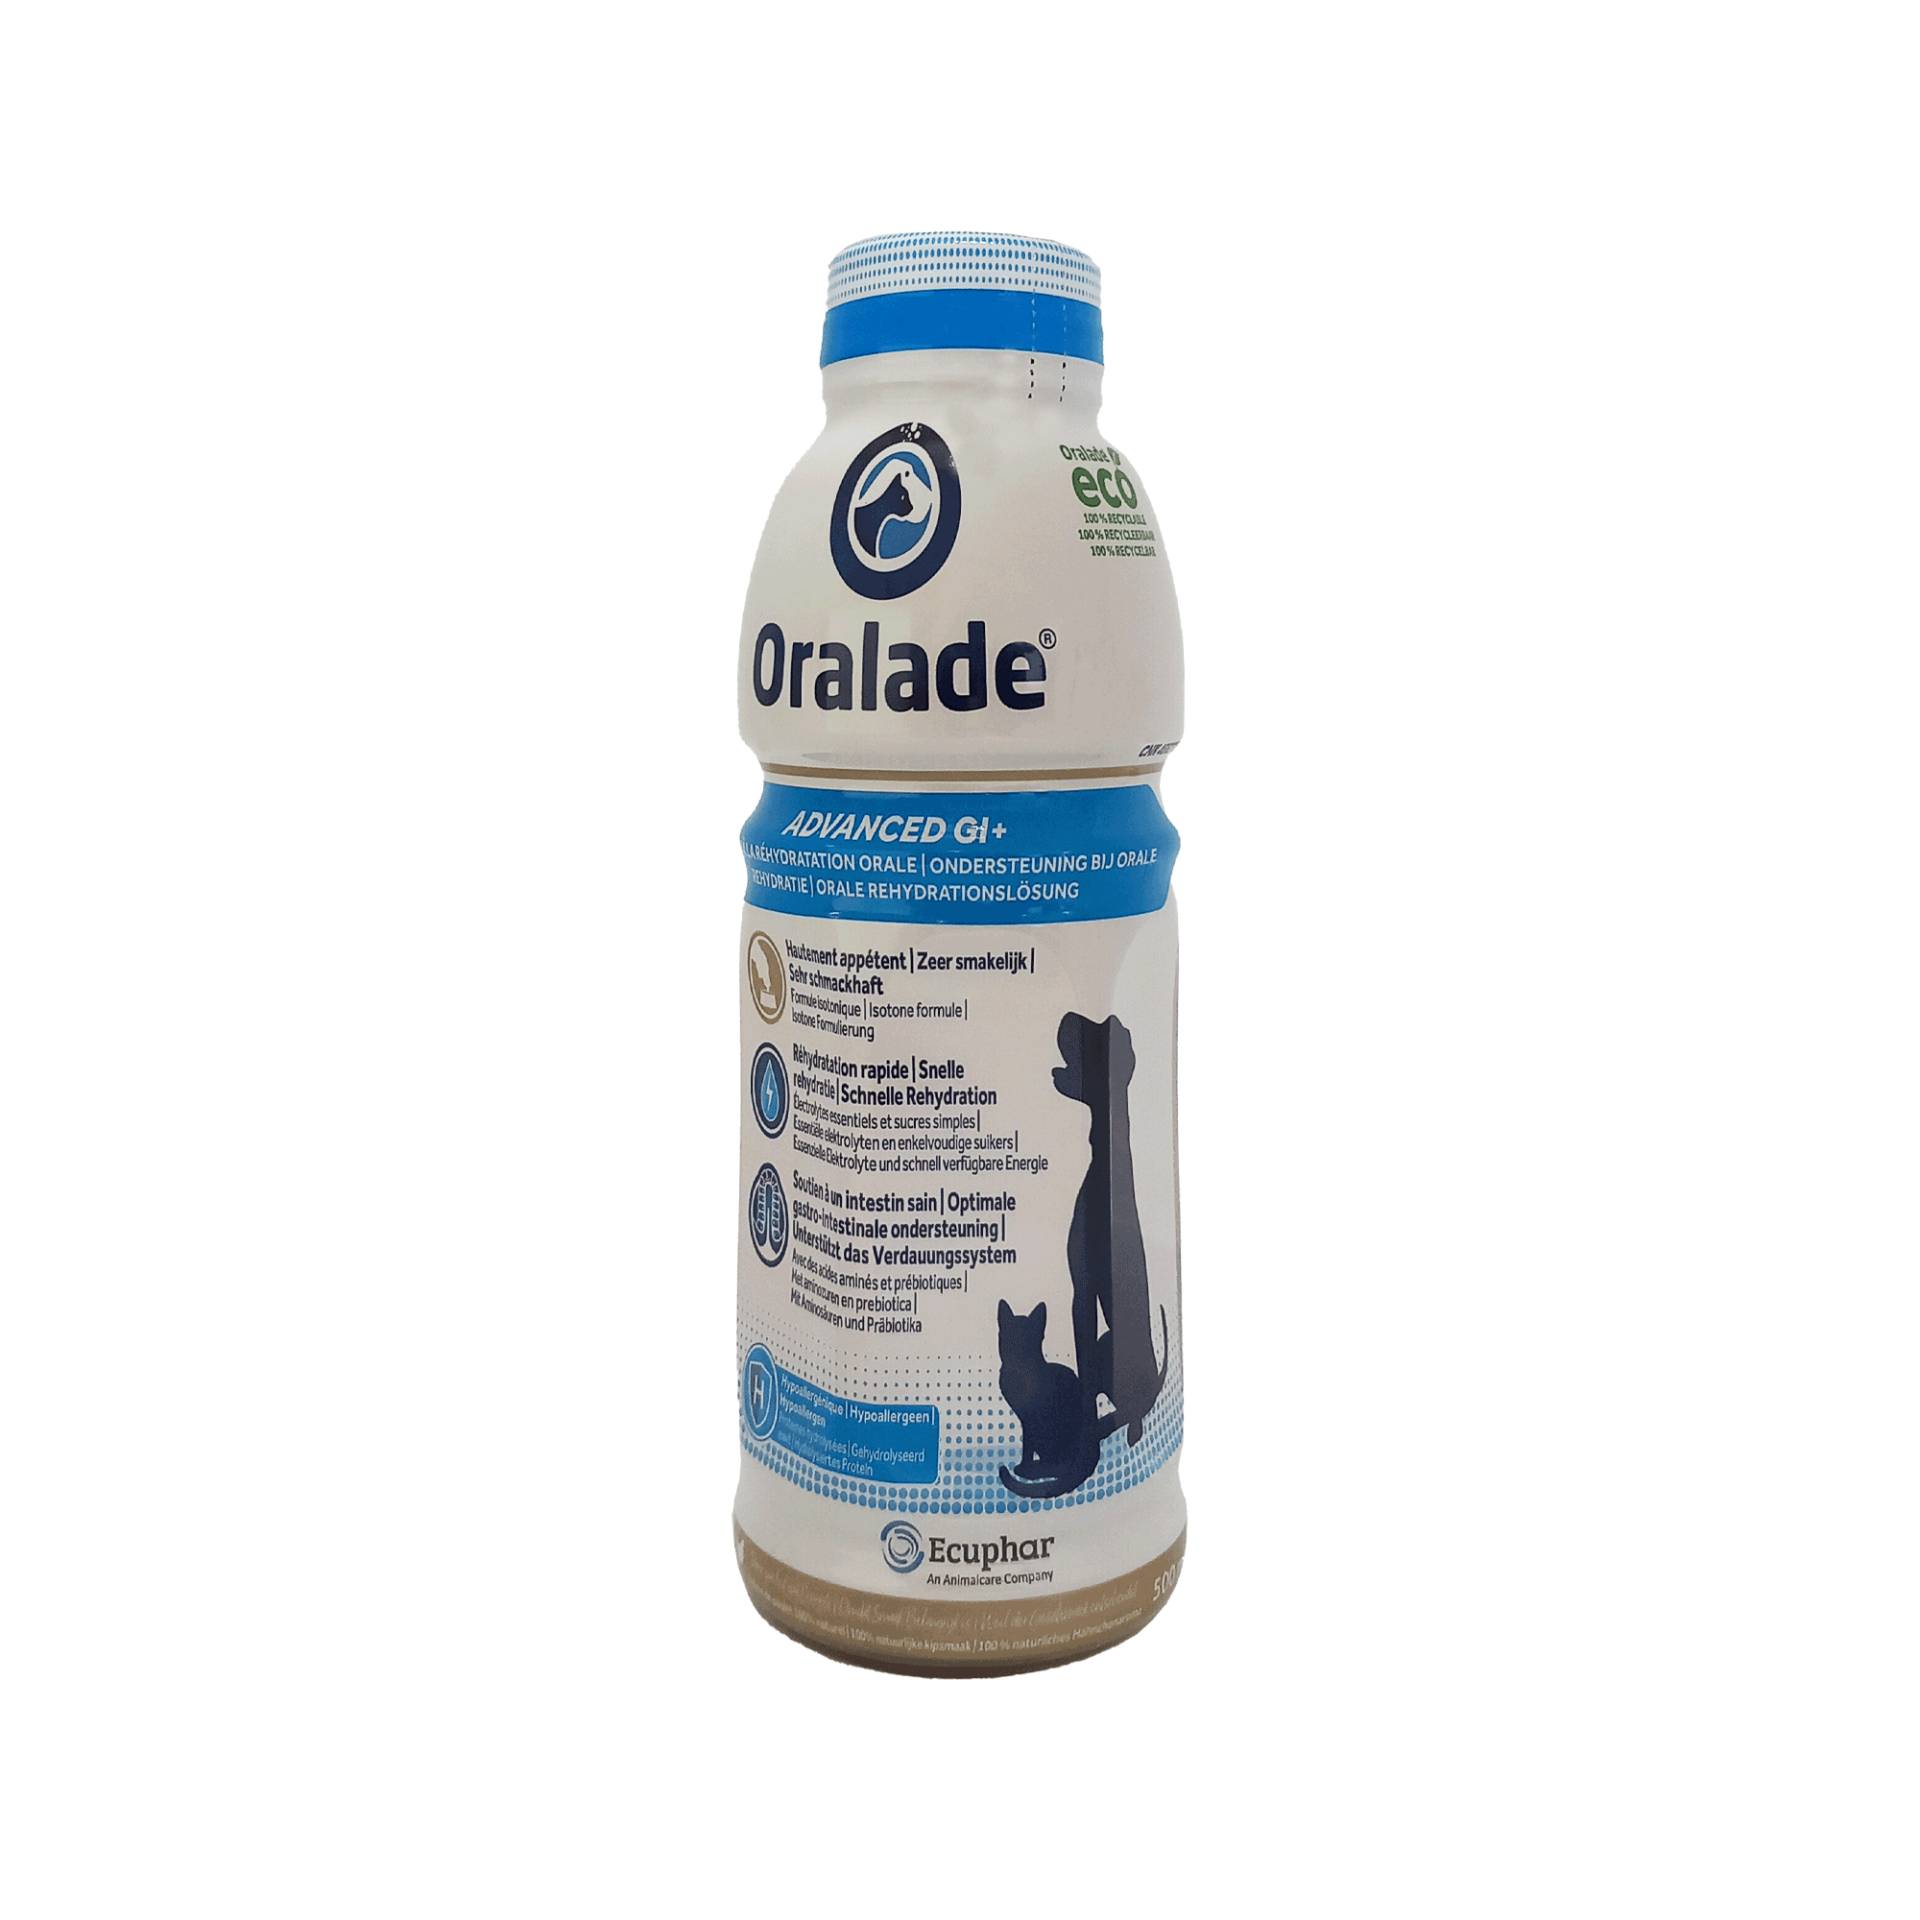 Oralade Advanced GI+ - 500 ml von Oralade